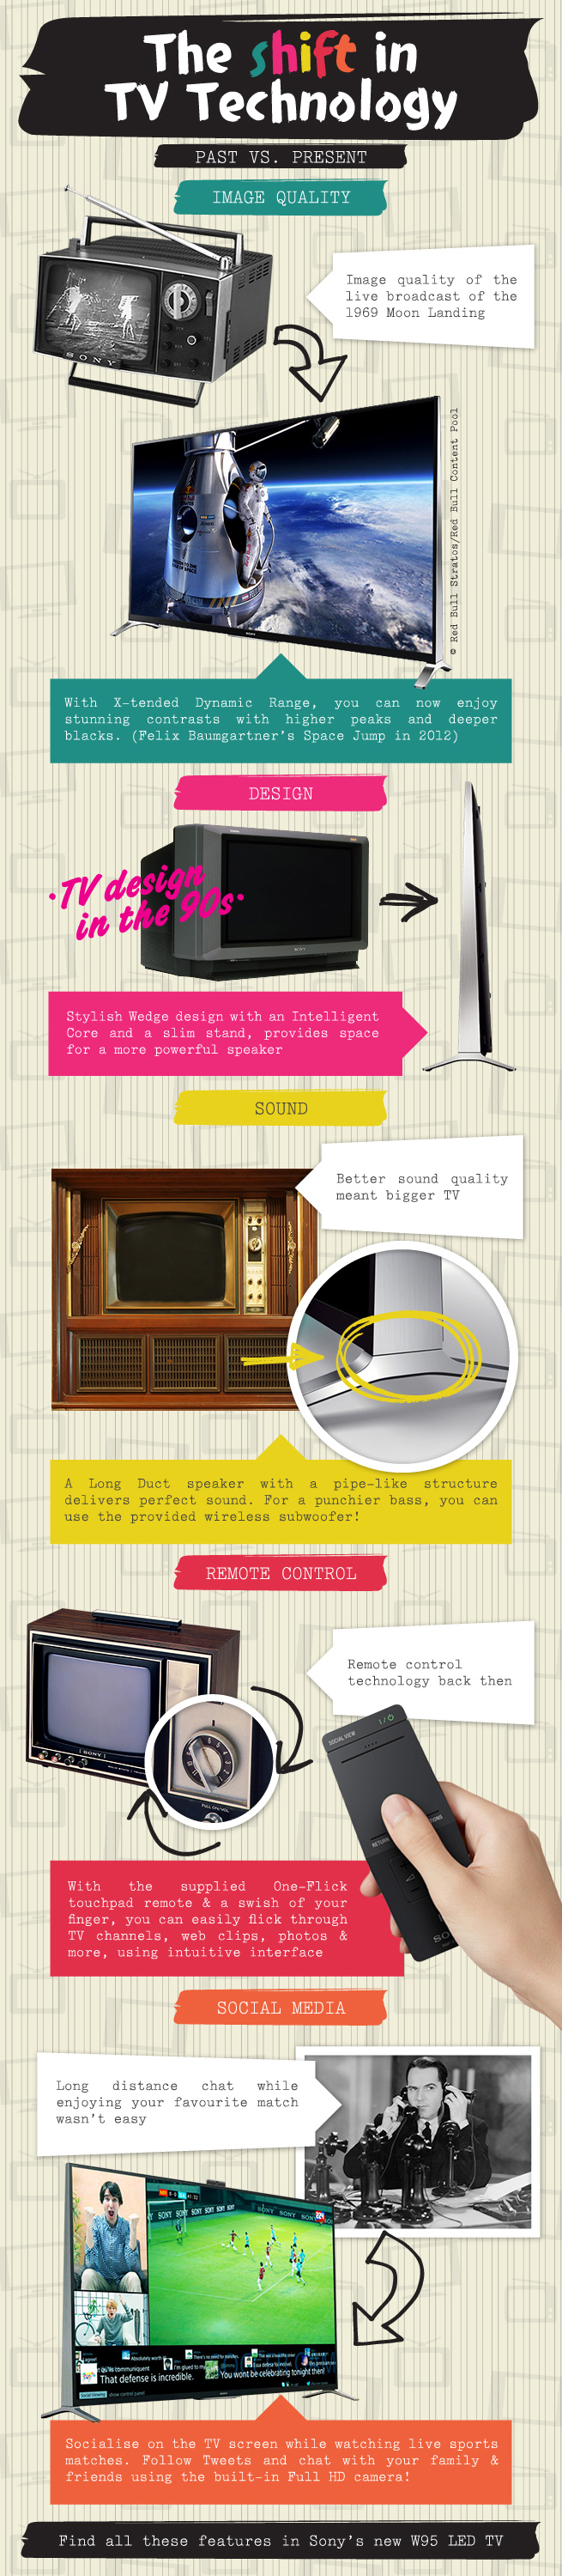 TV: Past vs Present - Infographic